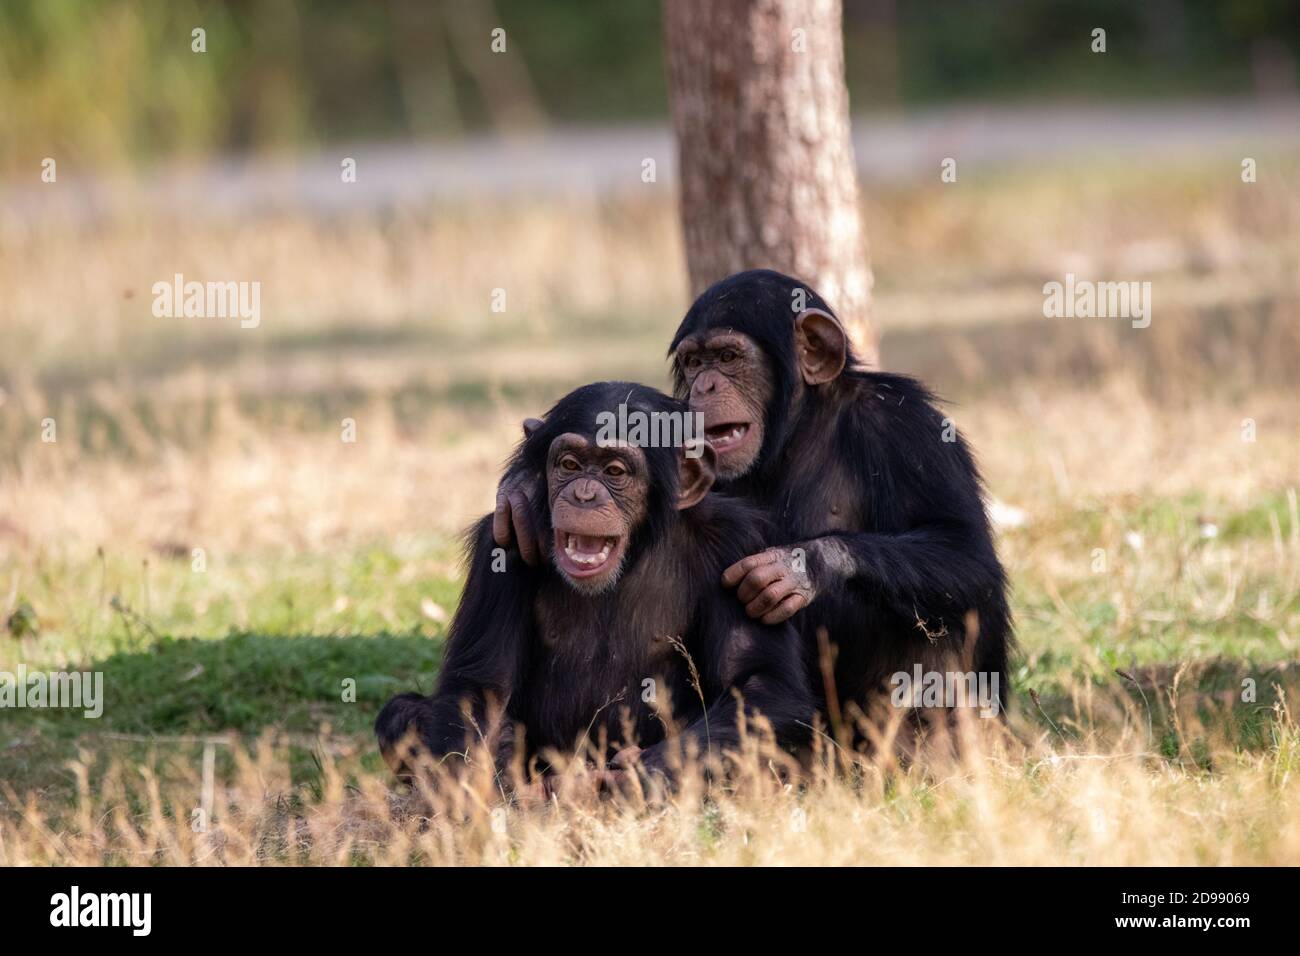 Two Monkeys Sitting And Having Fun Stock Photo Alamy